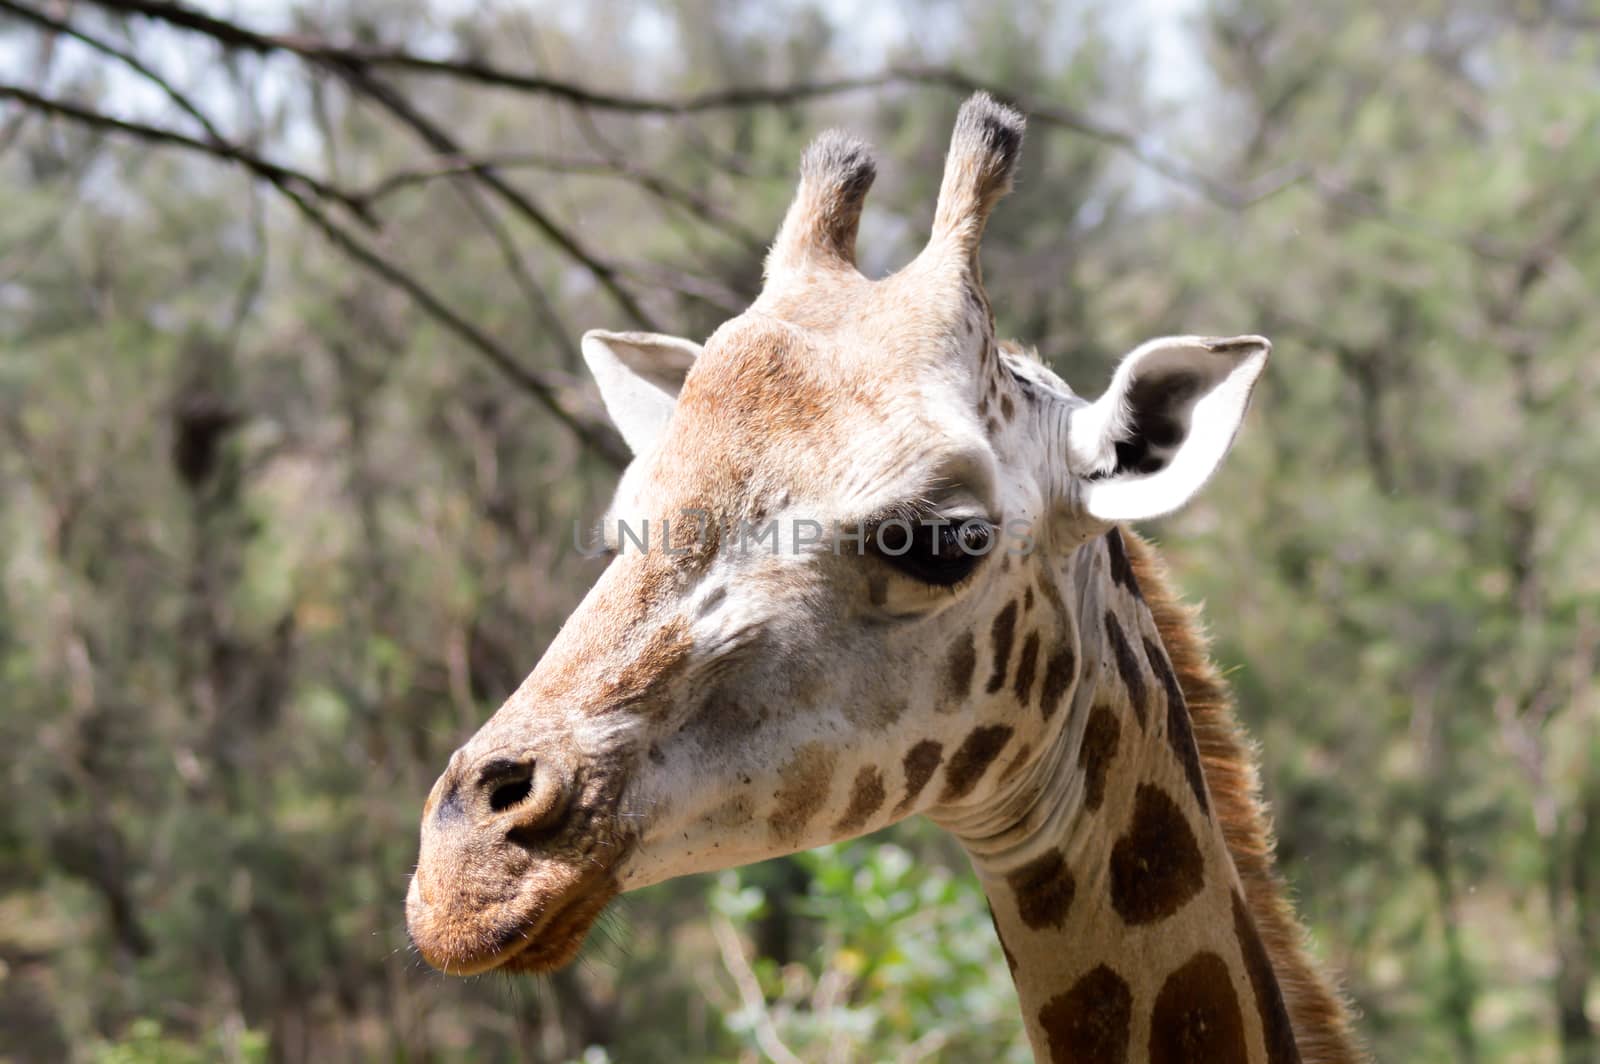 Giraffe head in a park by Philou1000